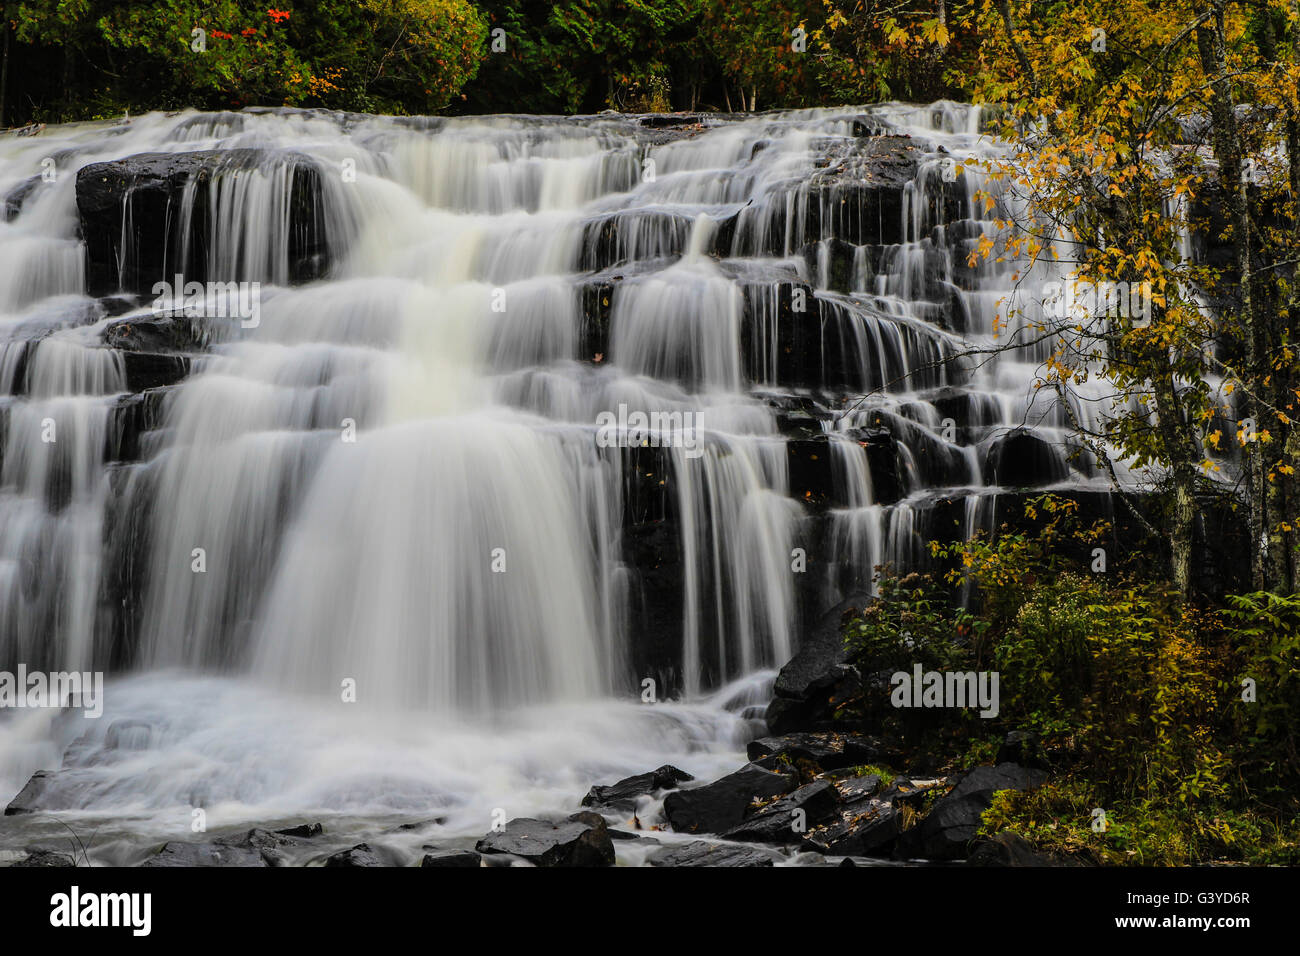 Michigan's Bond Falls In Autumn. Beautiful Bond Falls in Michigan's Upper Peninsula in the autumn. Stock Photo